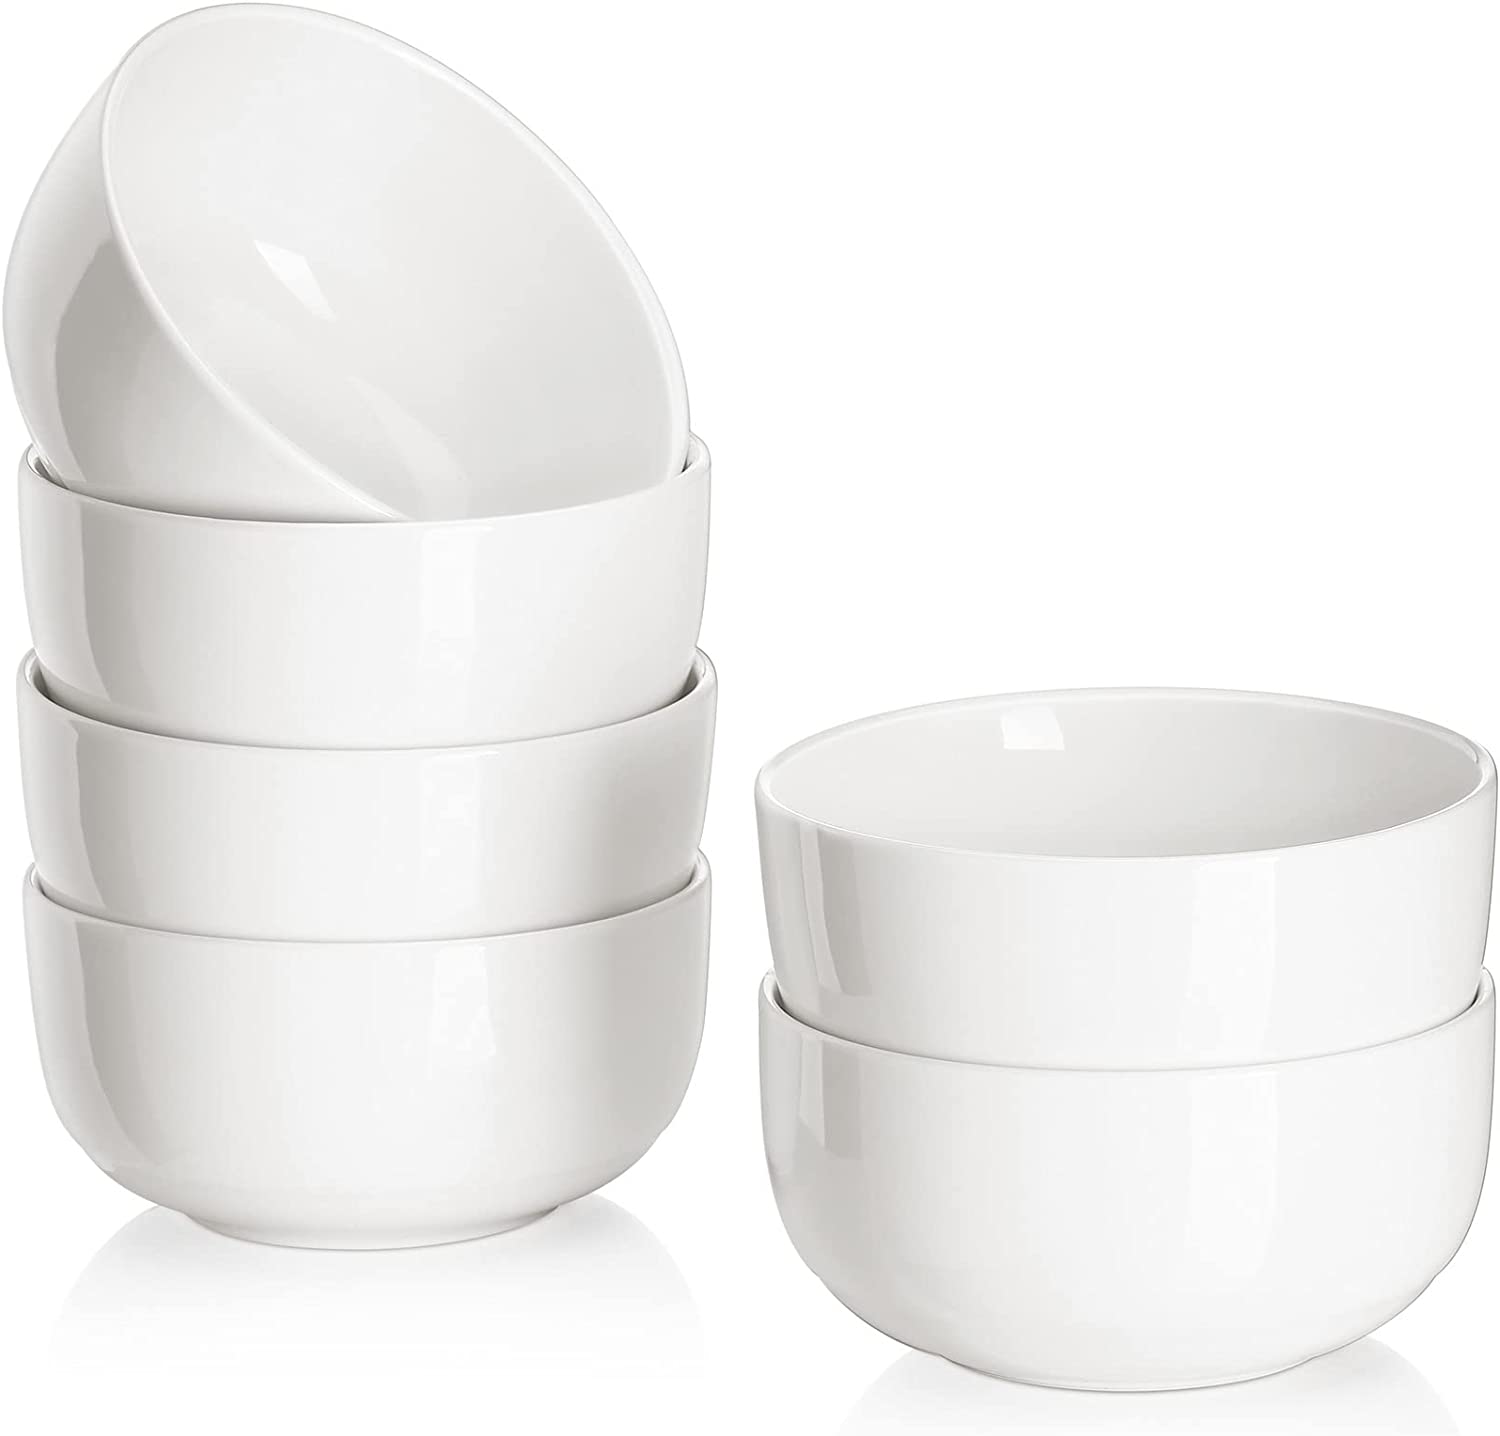 DOWAN Microwave Safe Porcelain Rice Bowls, 6-Piece